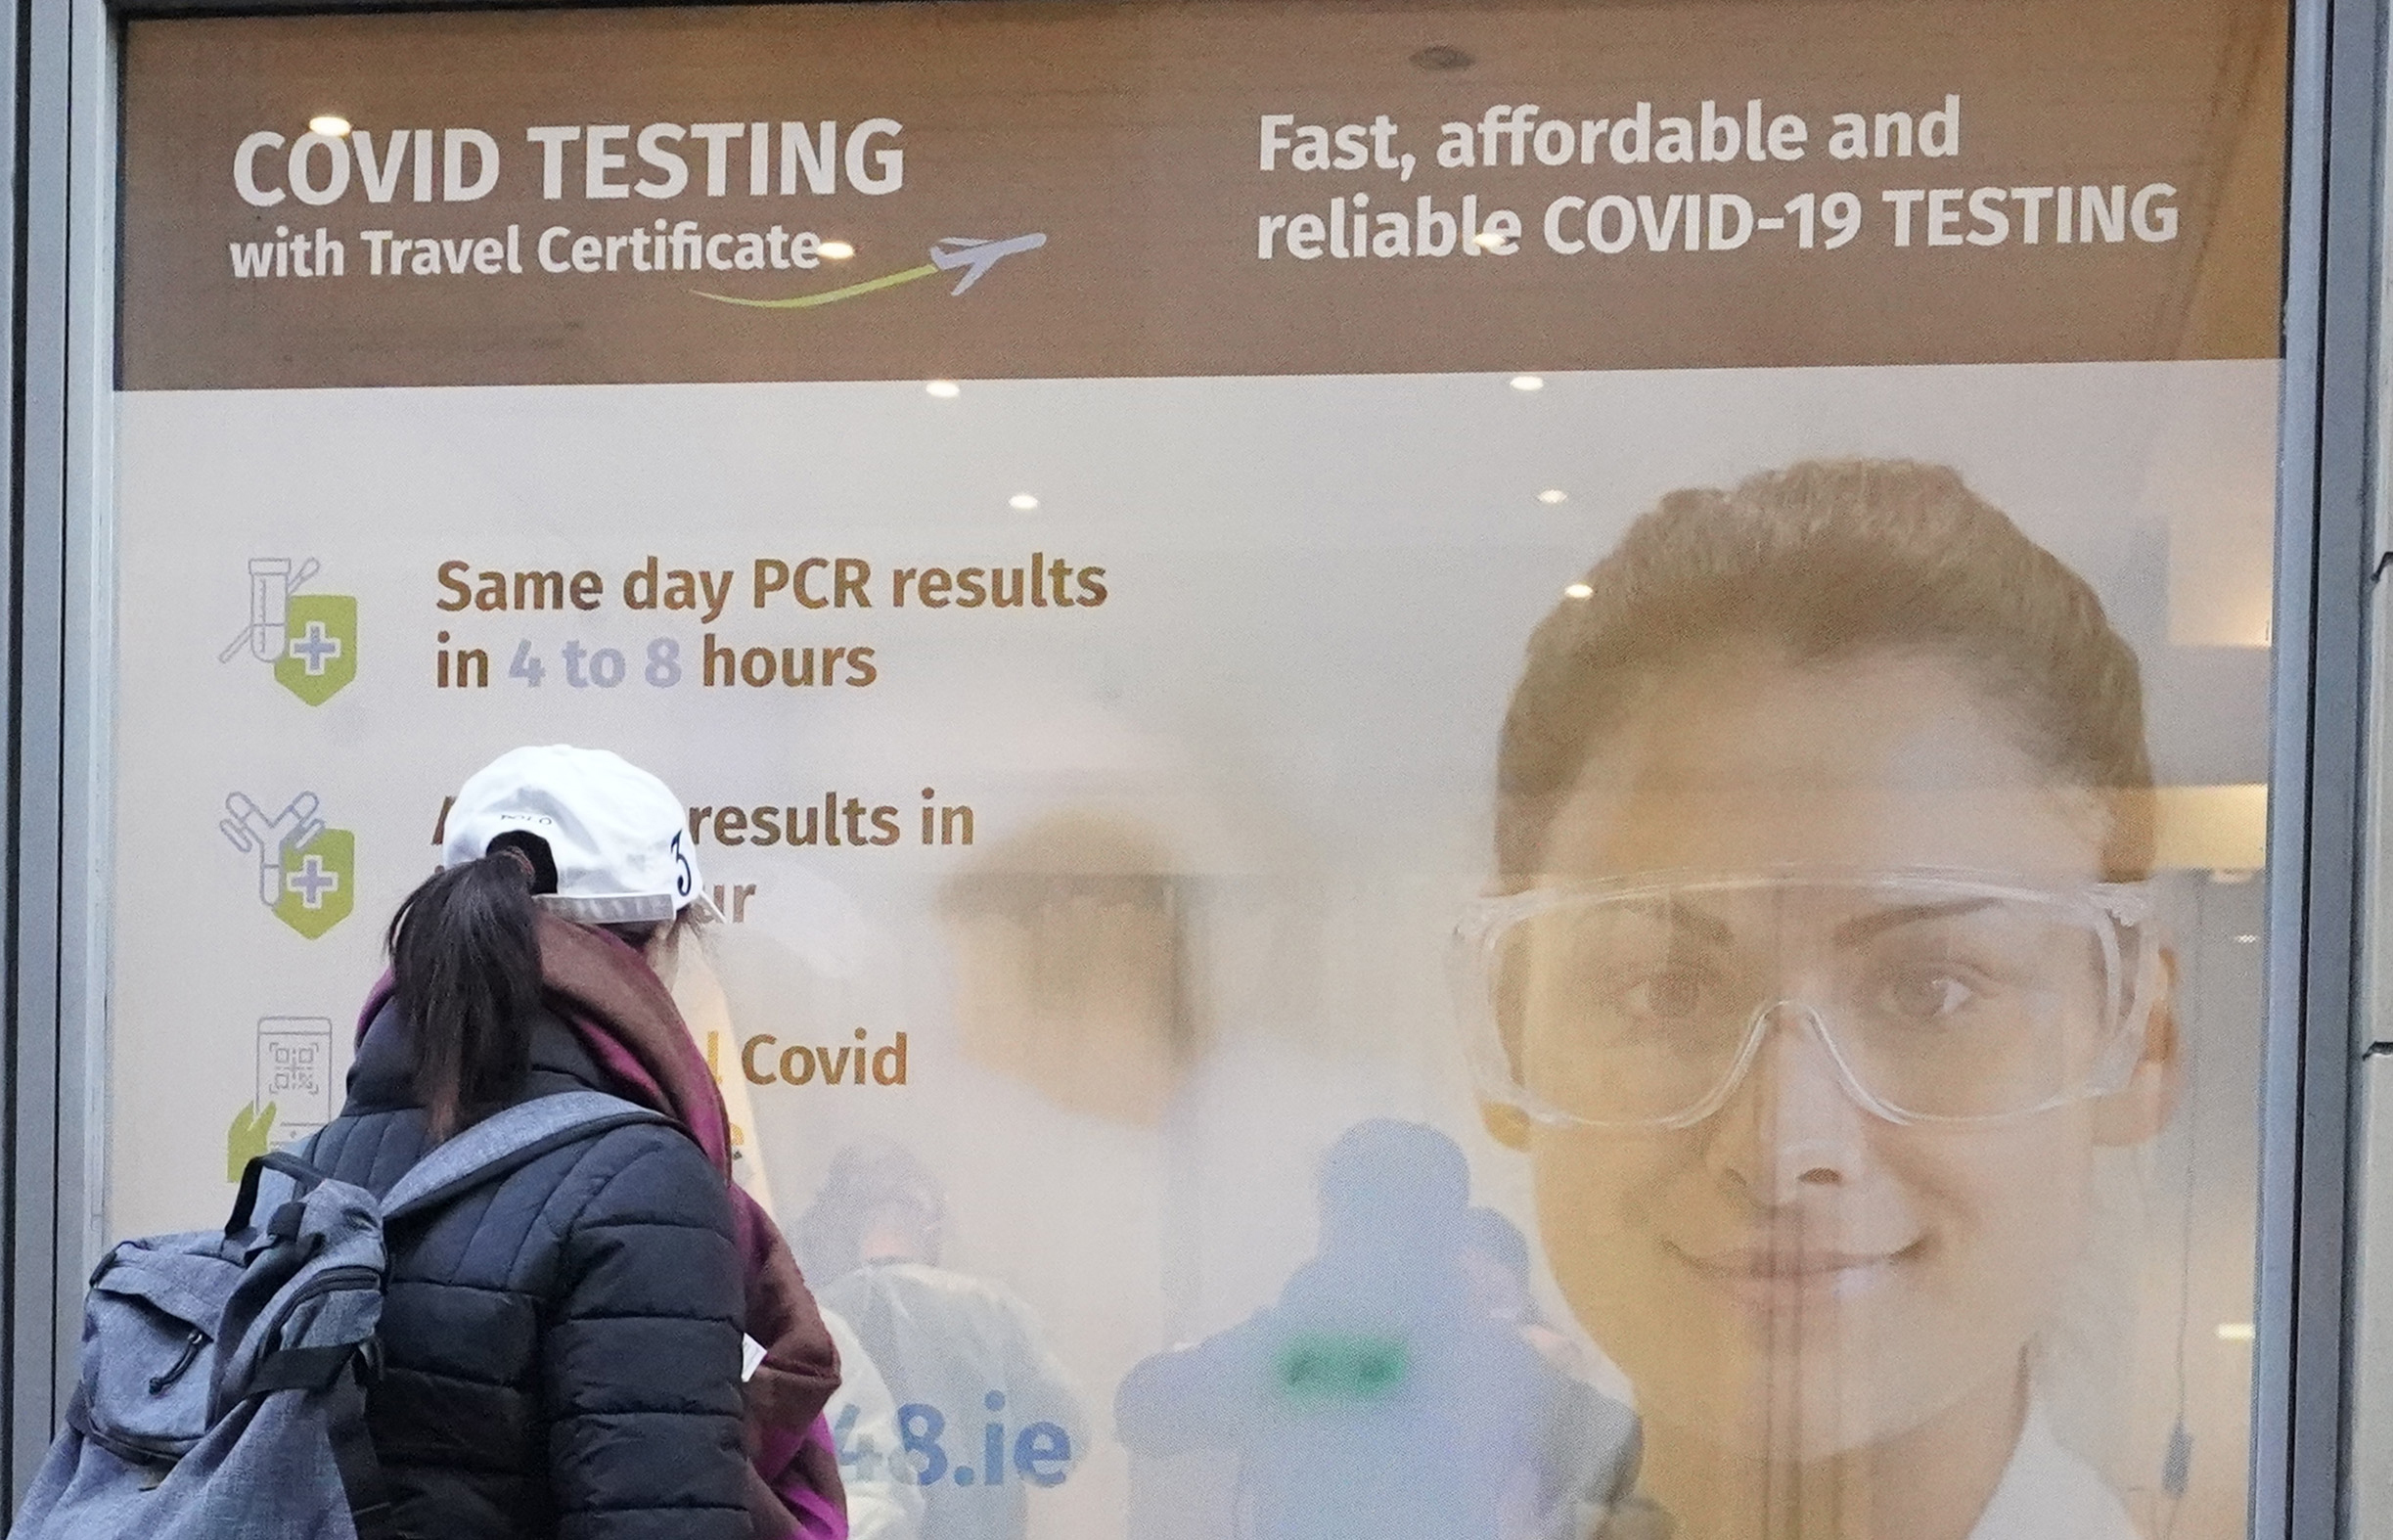 Covid testing center in Dublin.